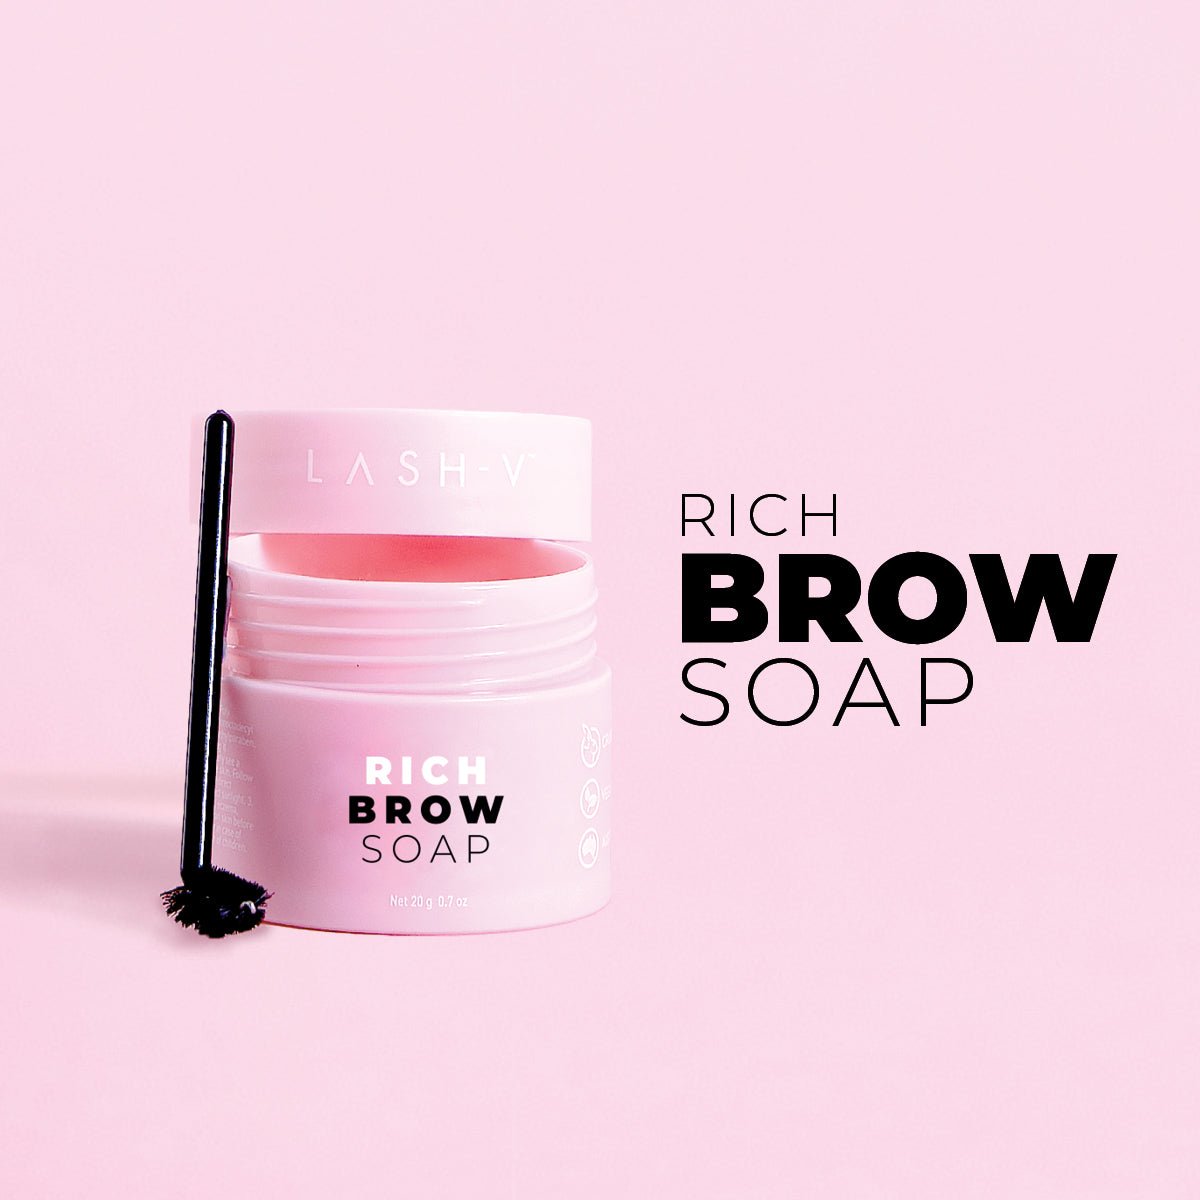 Rich Brow Soap 20g - LASH V